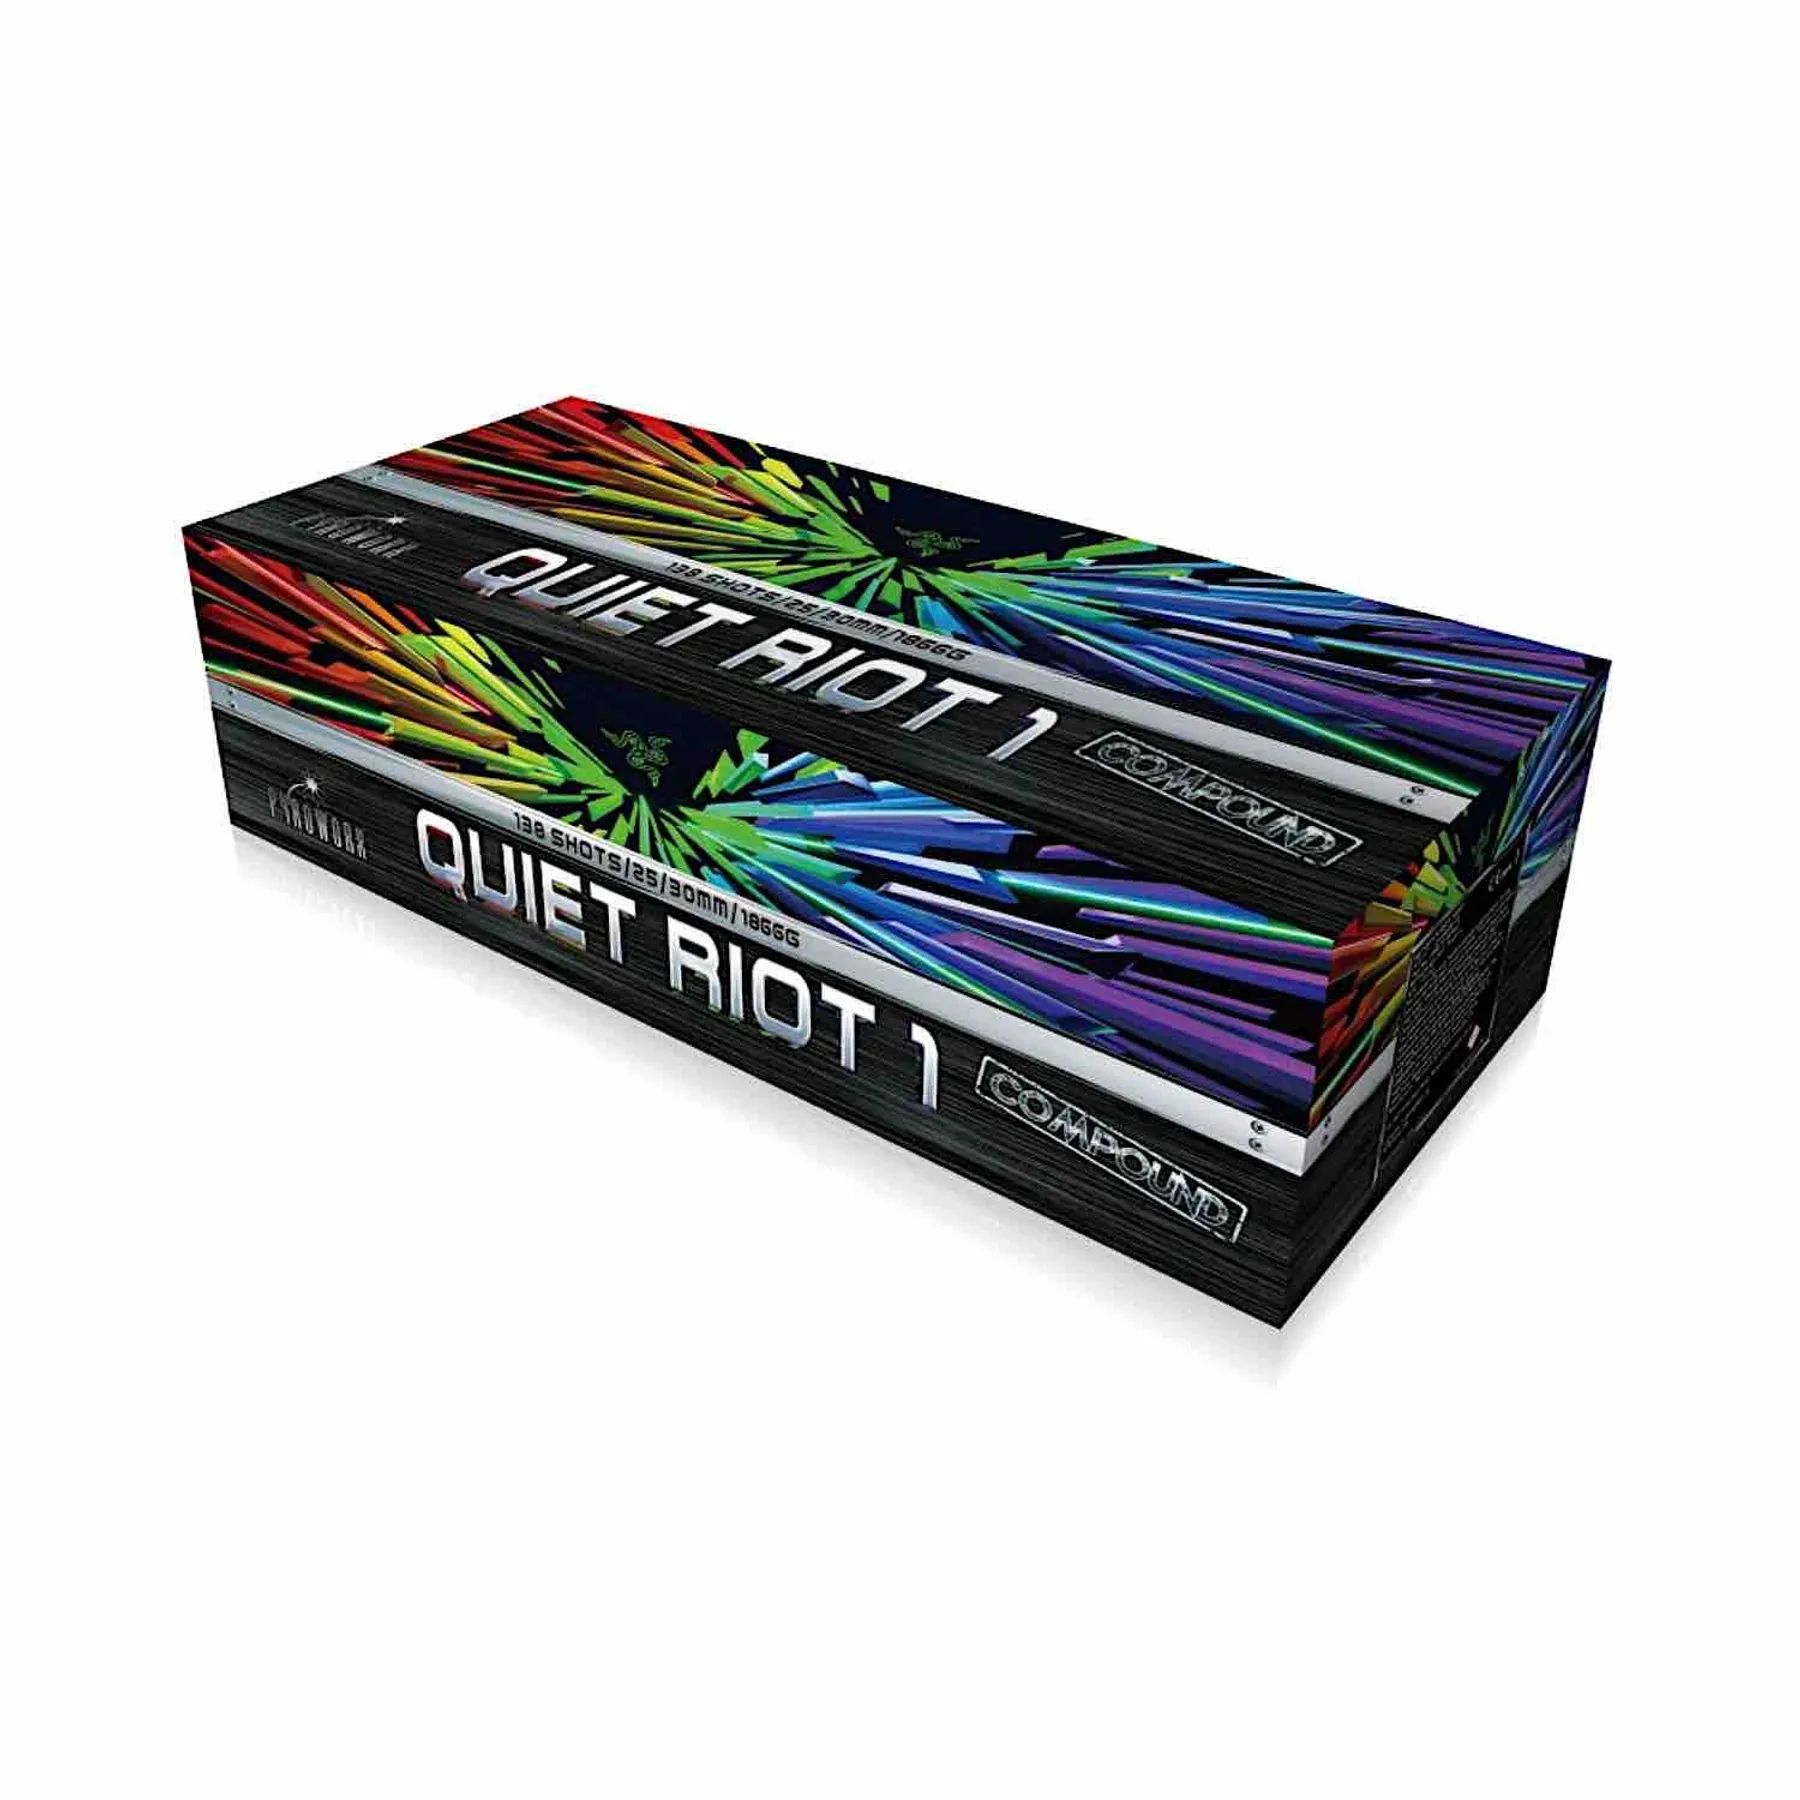 Quiet Riot 1 cover Firework Pyroworx